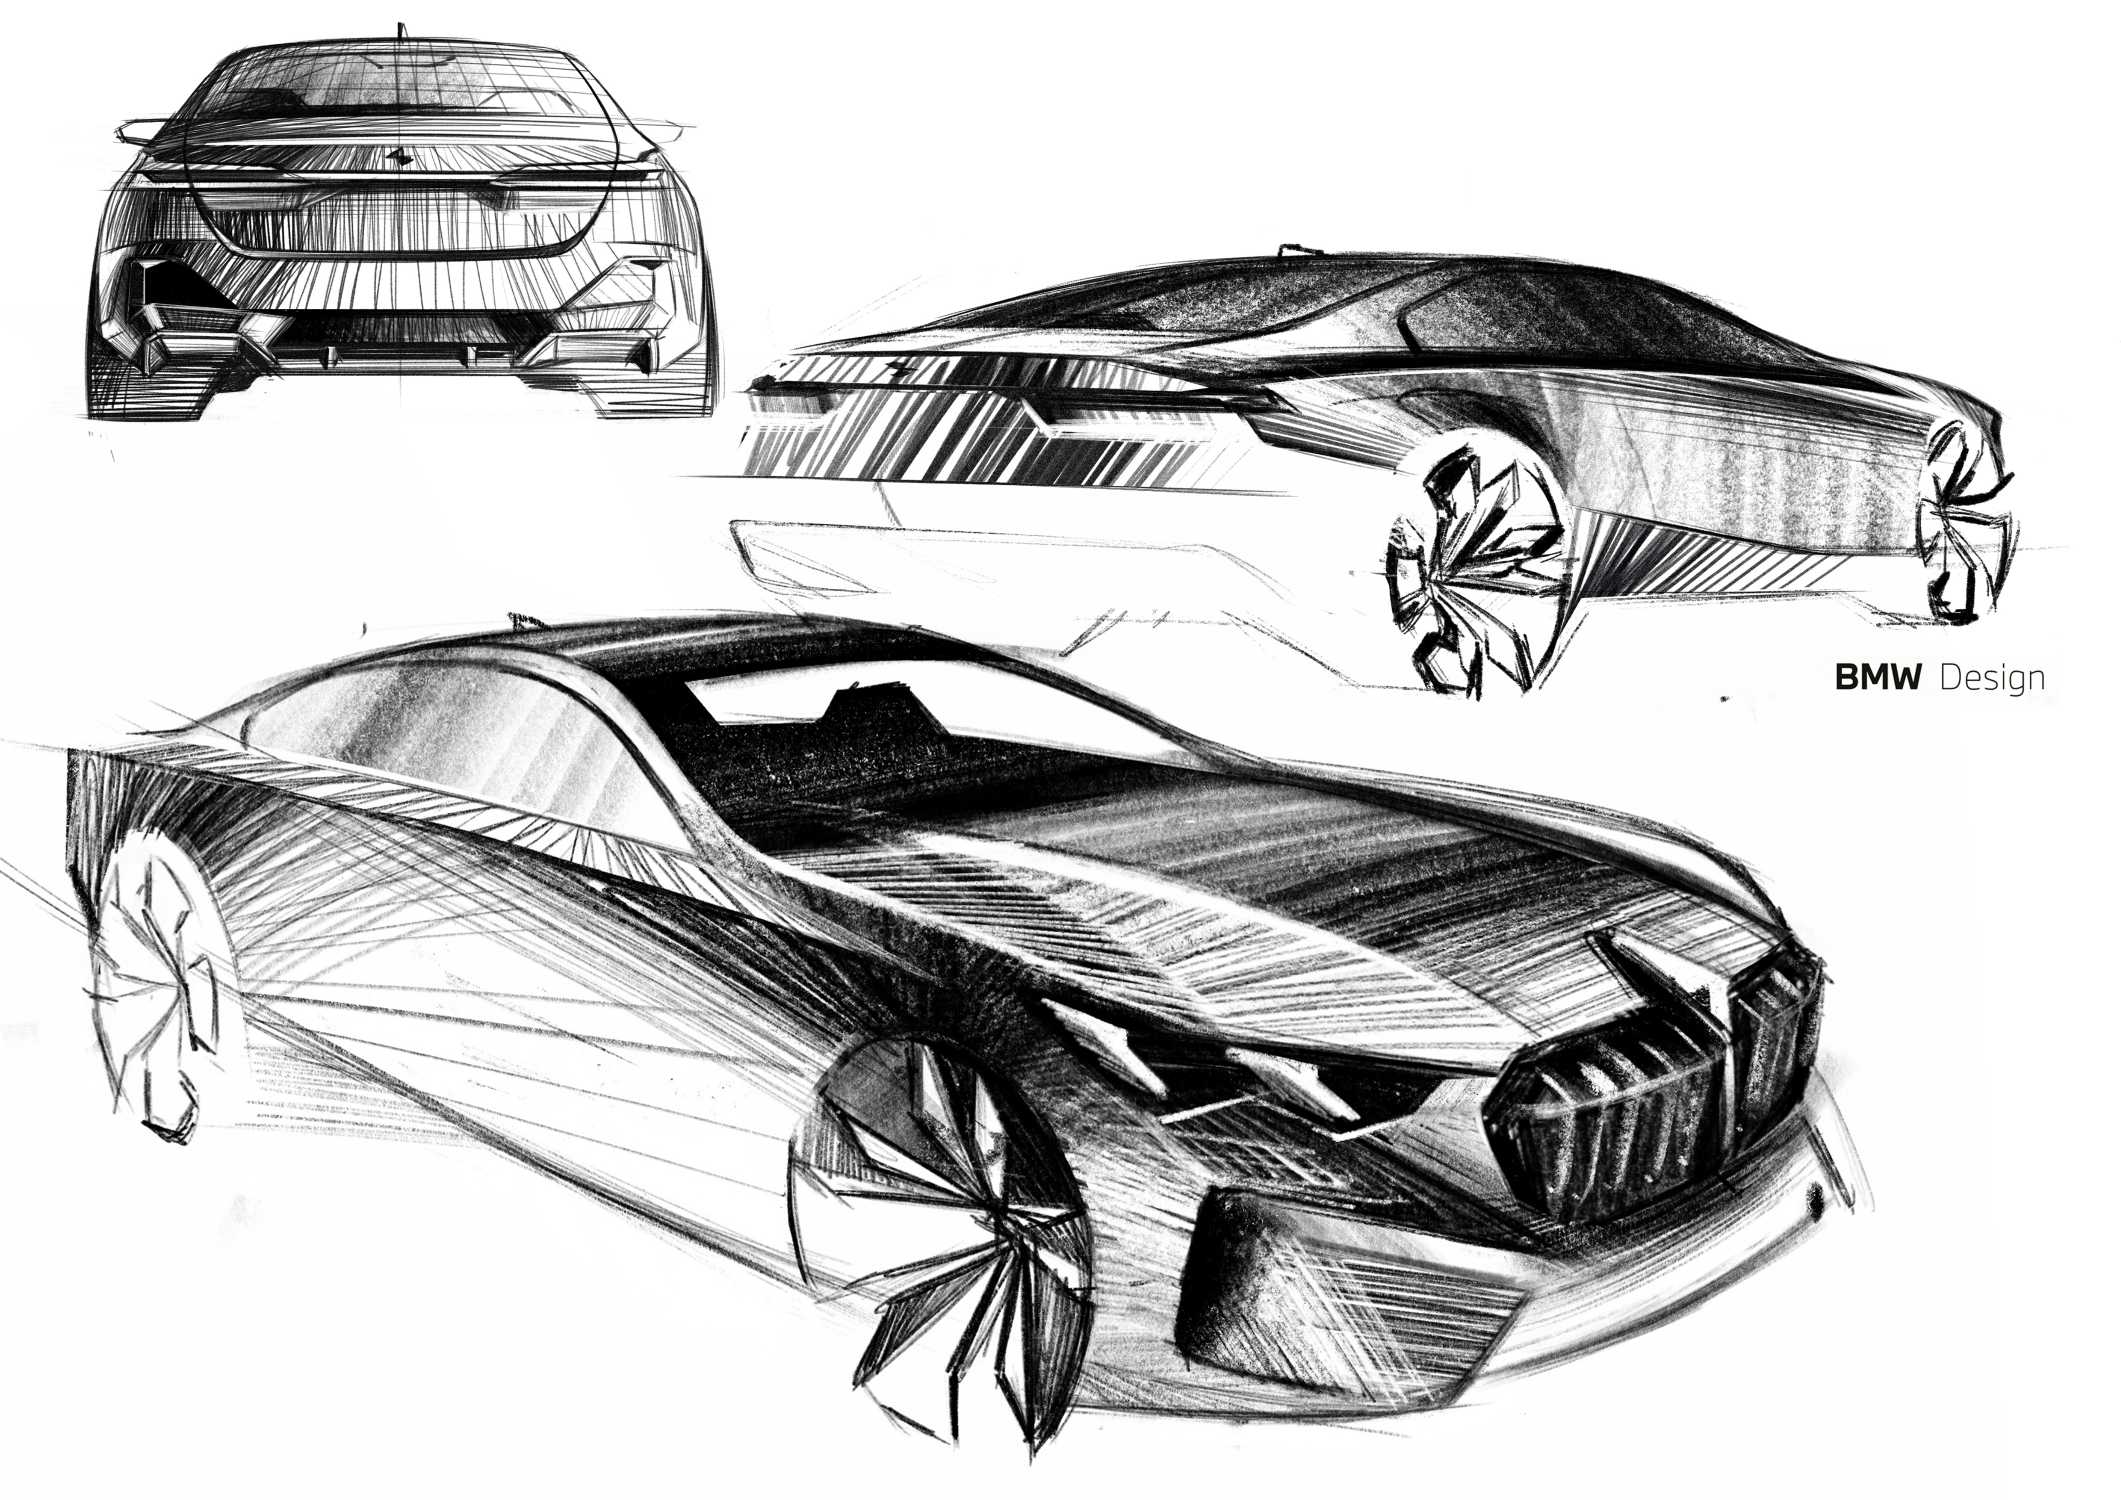 BMW Concept 5 Series Gran Turismo design sketches still confuse us   Autoblog